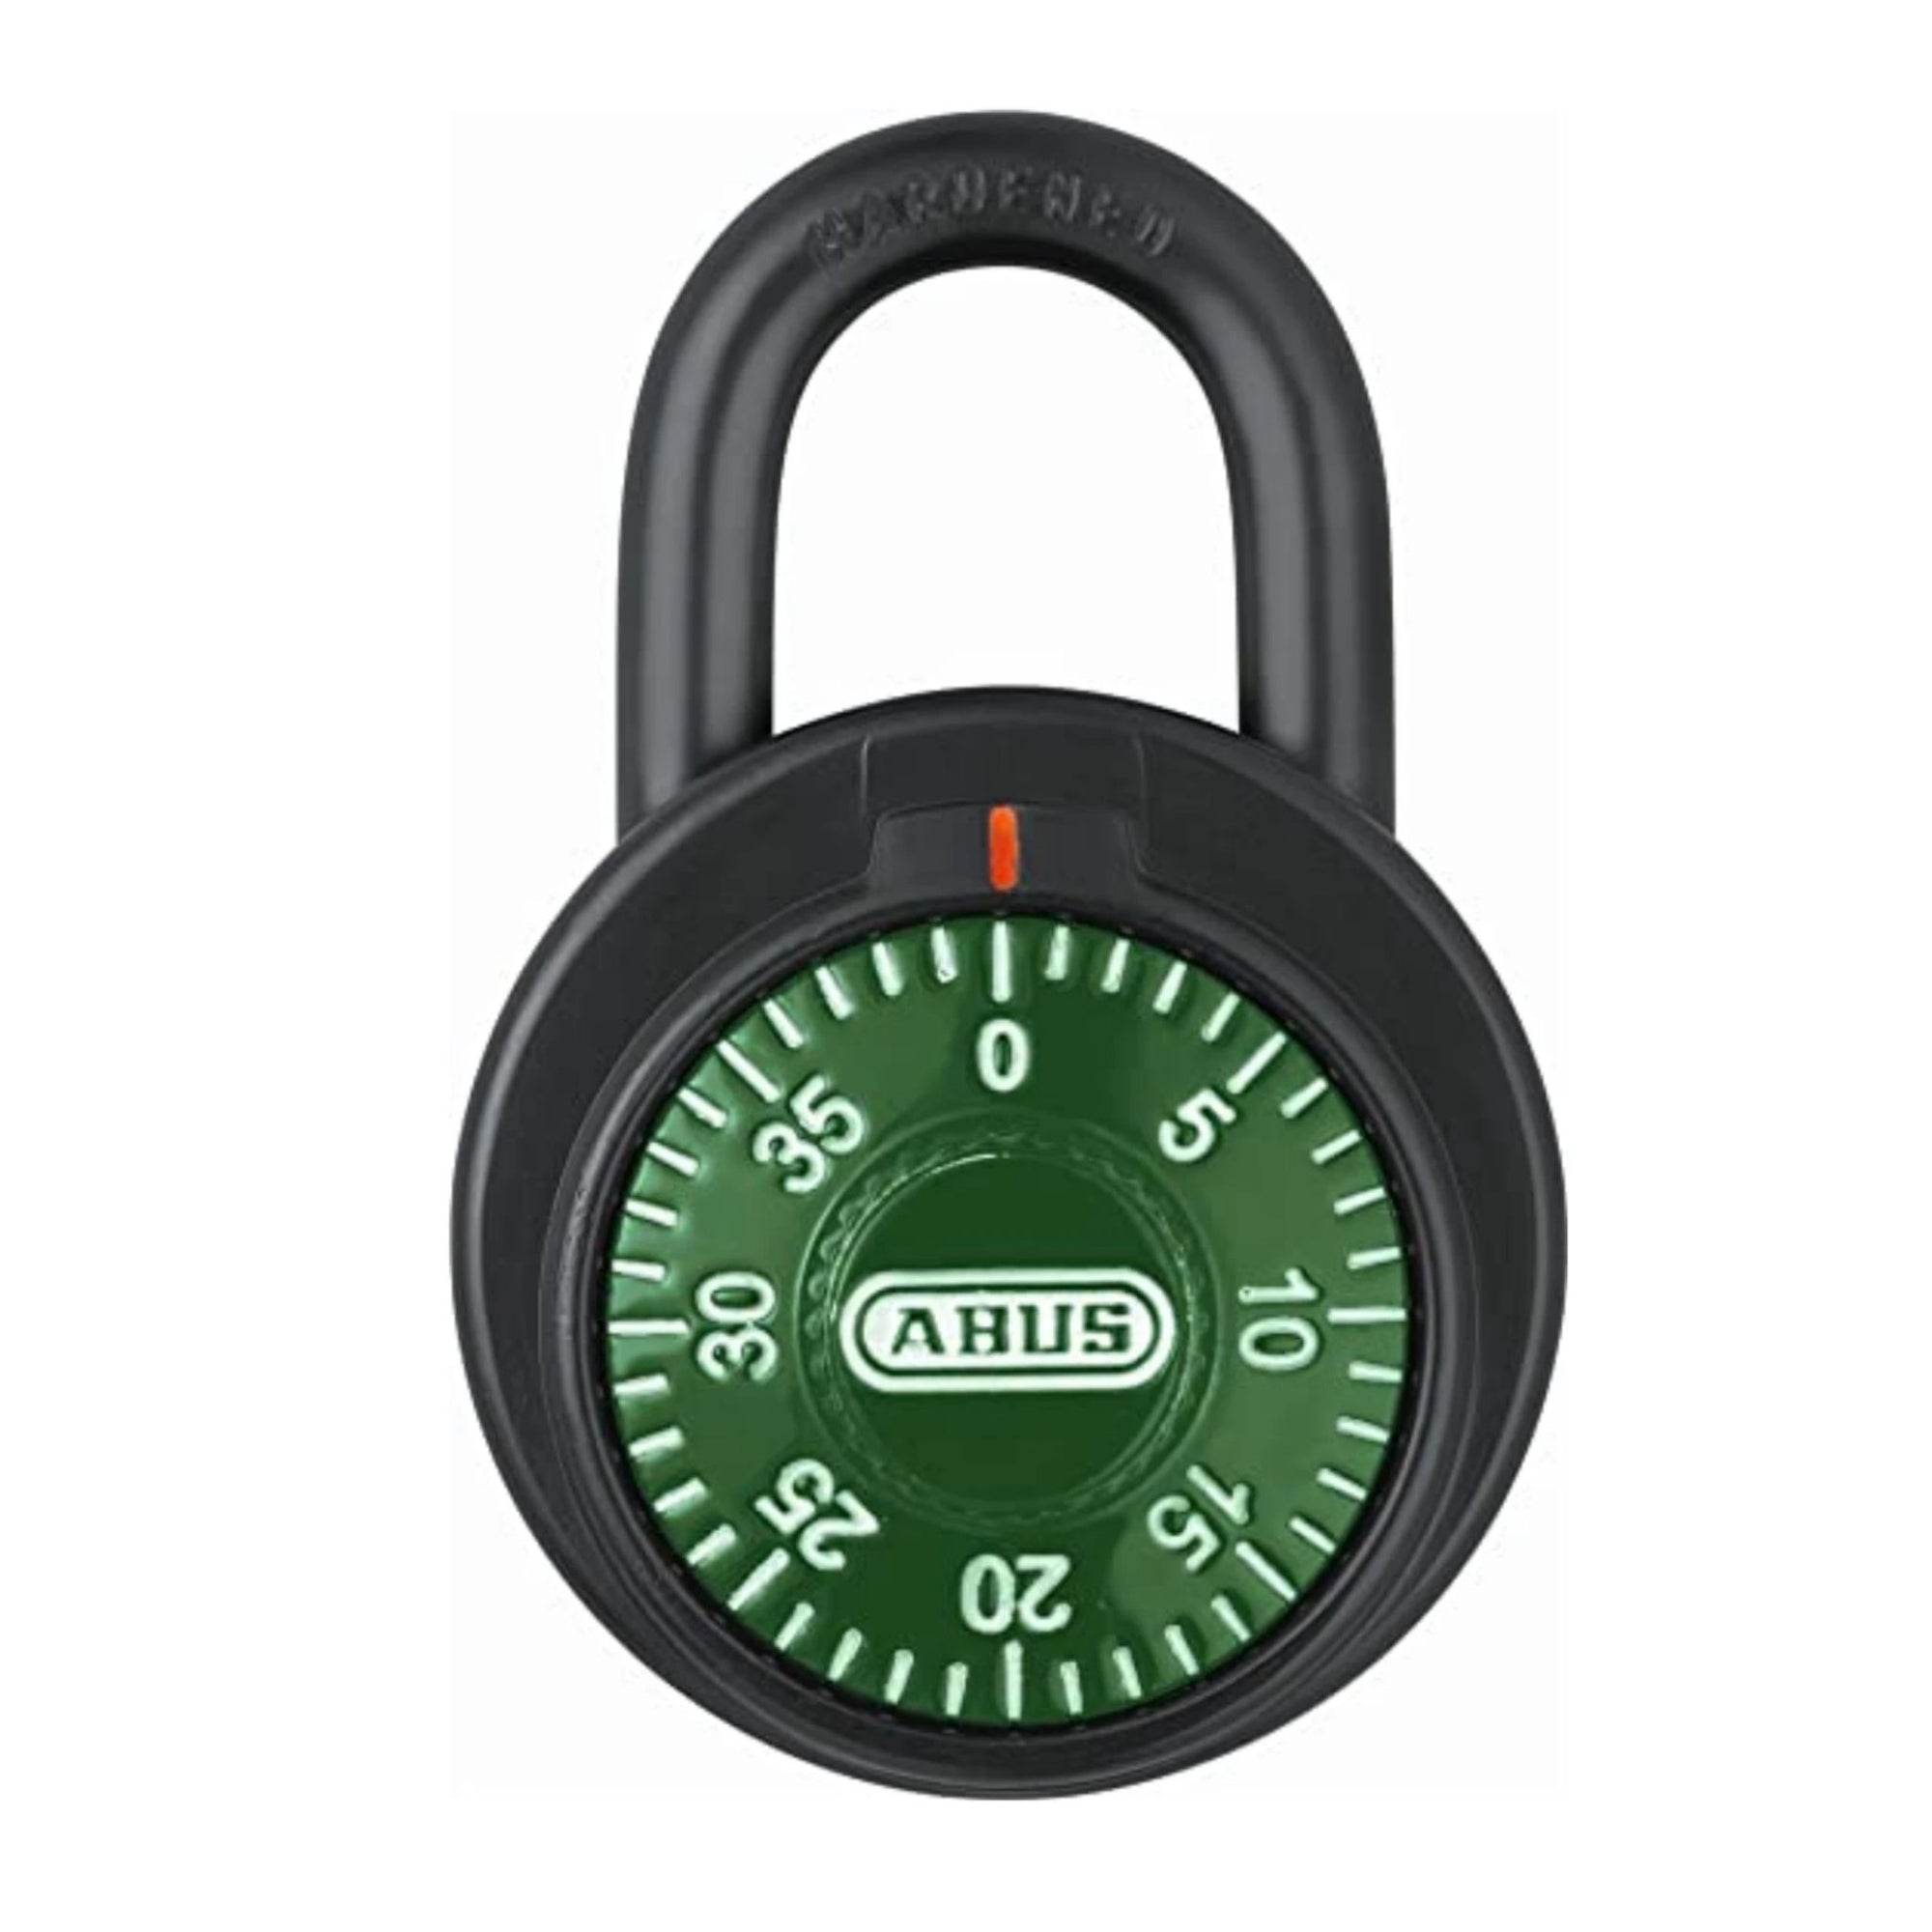 Abus 78/50 KC KA 502A Green Locker Padlock with Key Control Matched to Key Number KA502A - The Lock Source